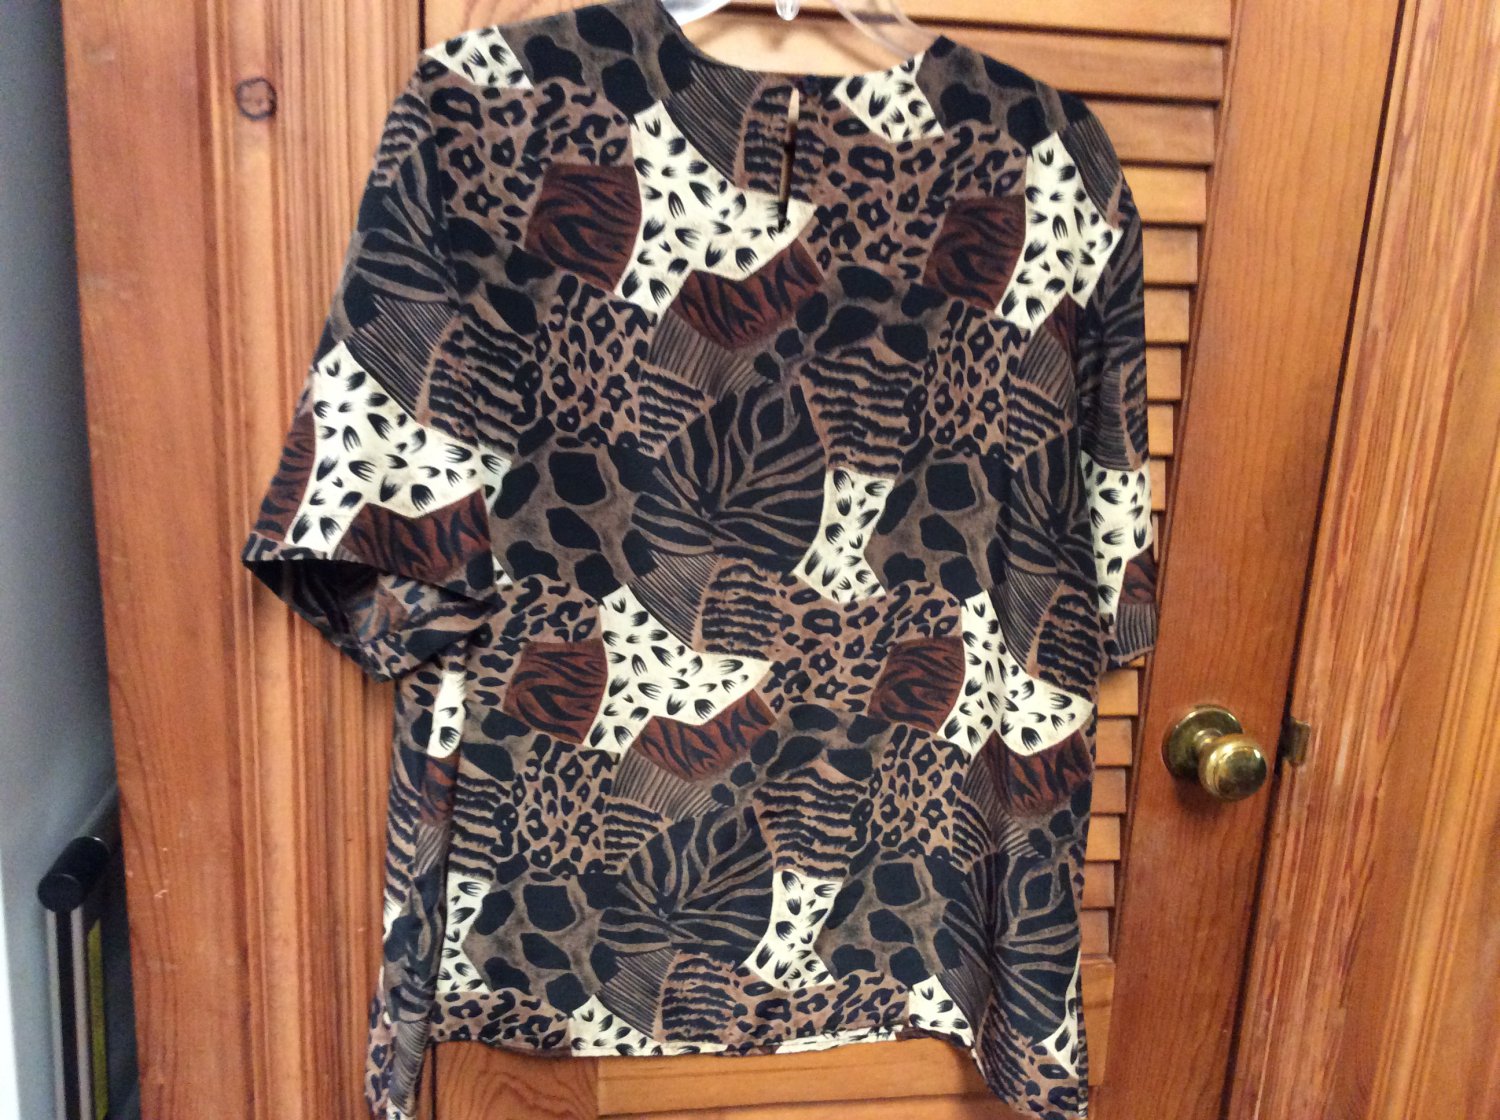 Southern Lady Cheetah Animal Jungle Print Blouse Top S/S size 16